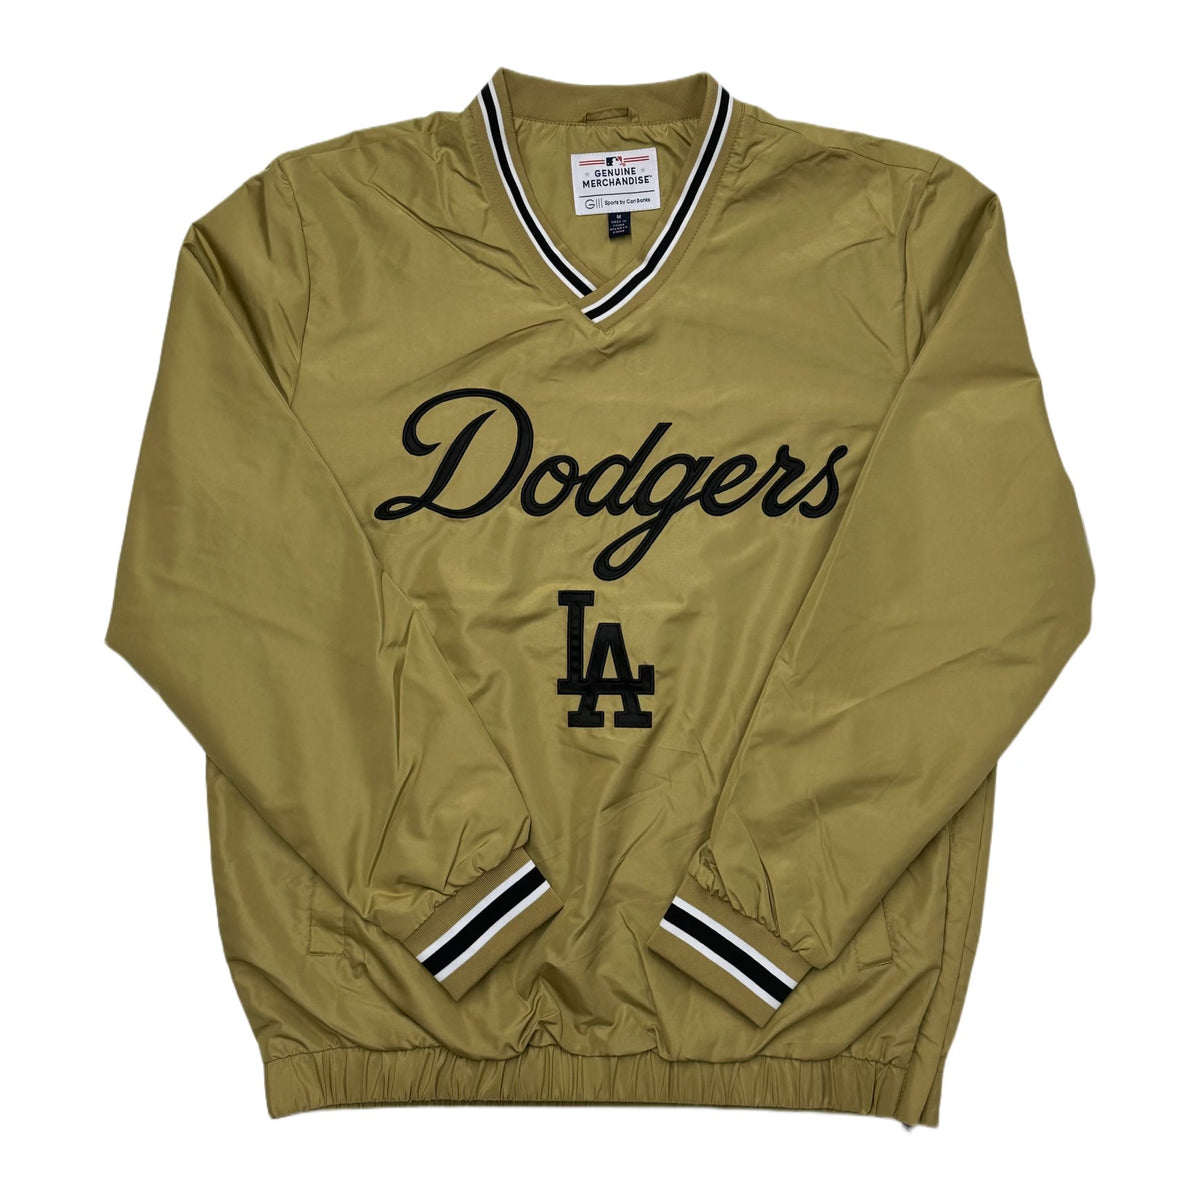 MLB Dodgers Sweatshirt Vintage Dodgers Crewneck Dodgers